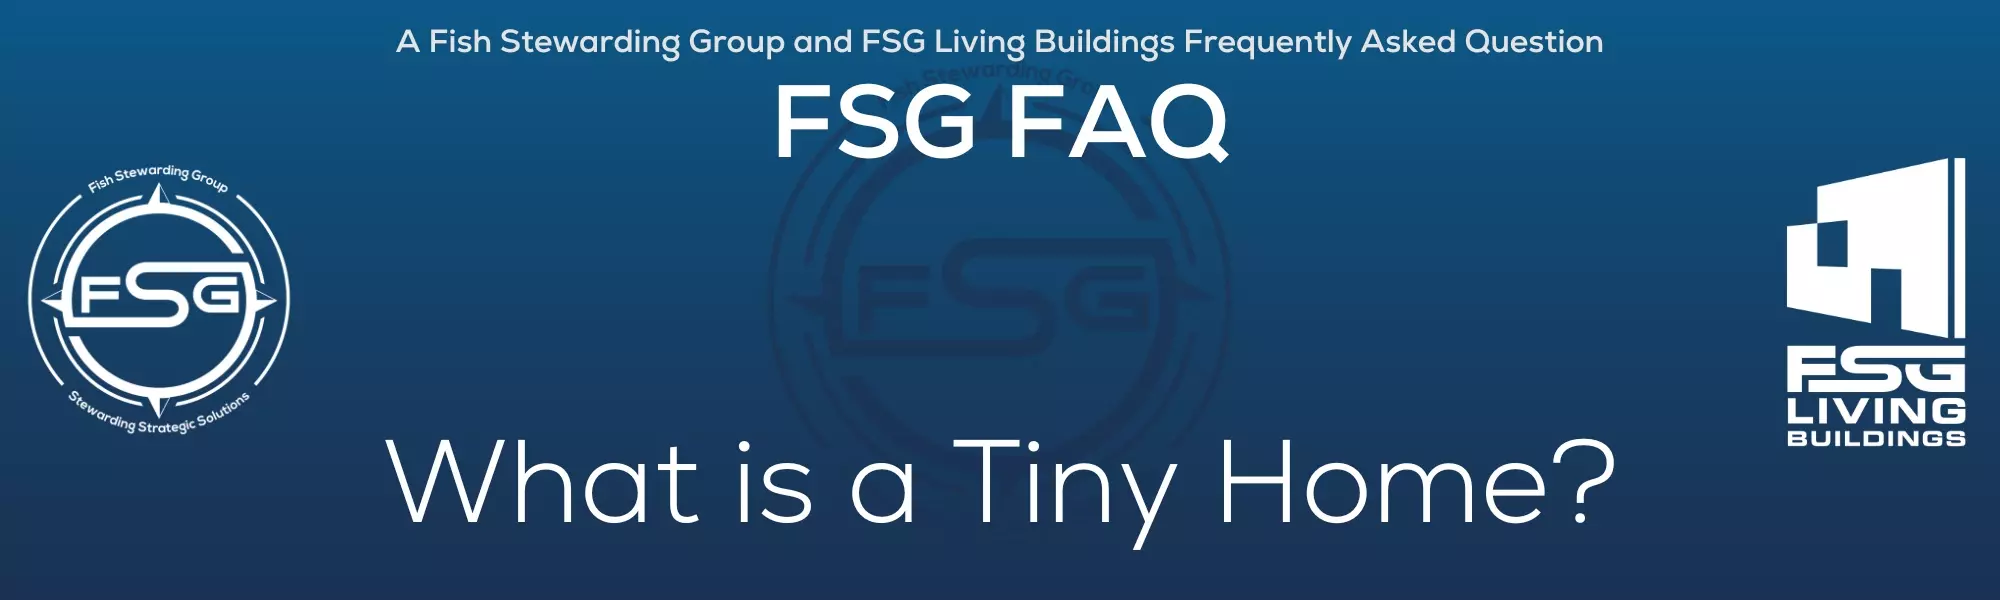 FSG Living Buildings FAQS - what is a tiny home faq